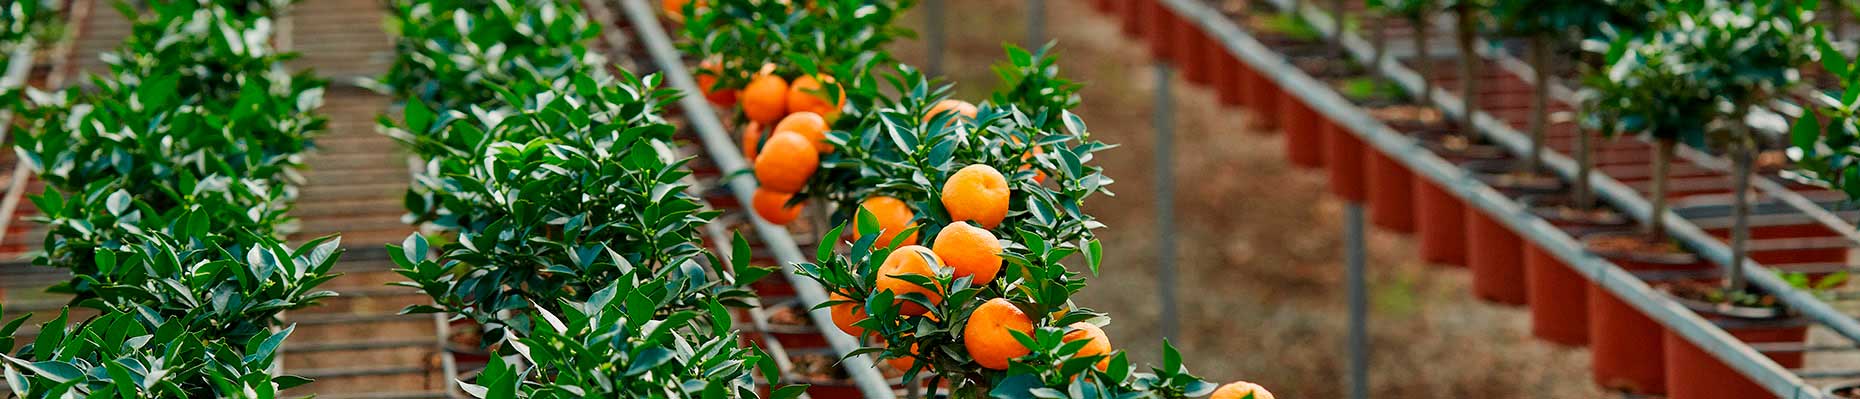 arance-agrumi-giambo-piante.jpg